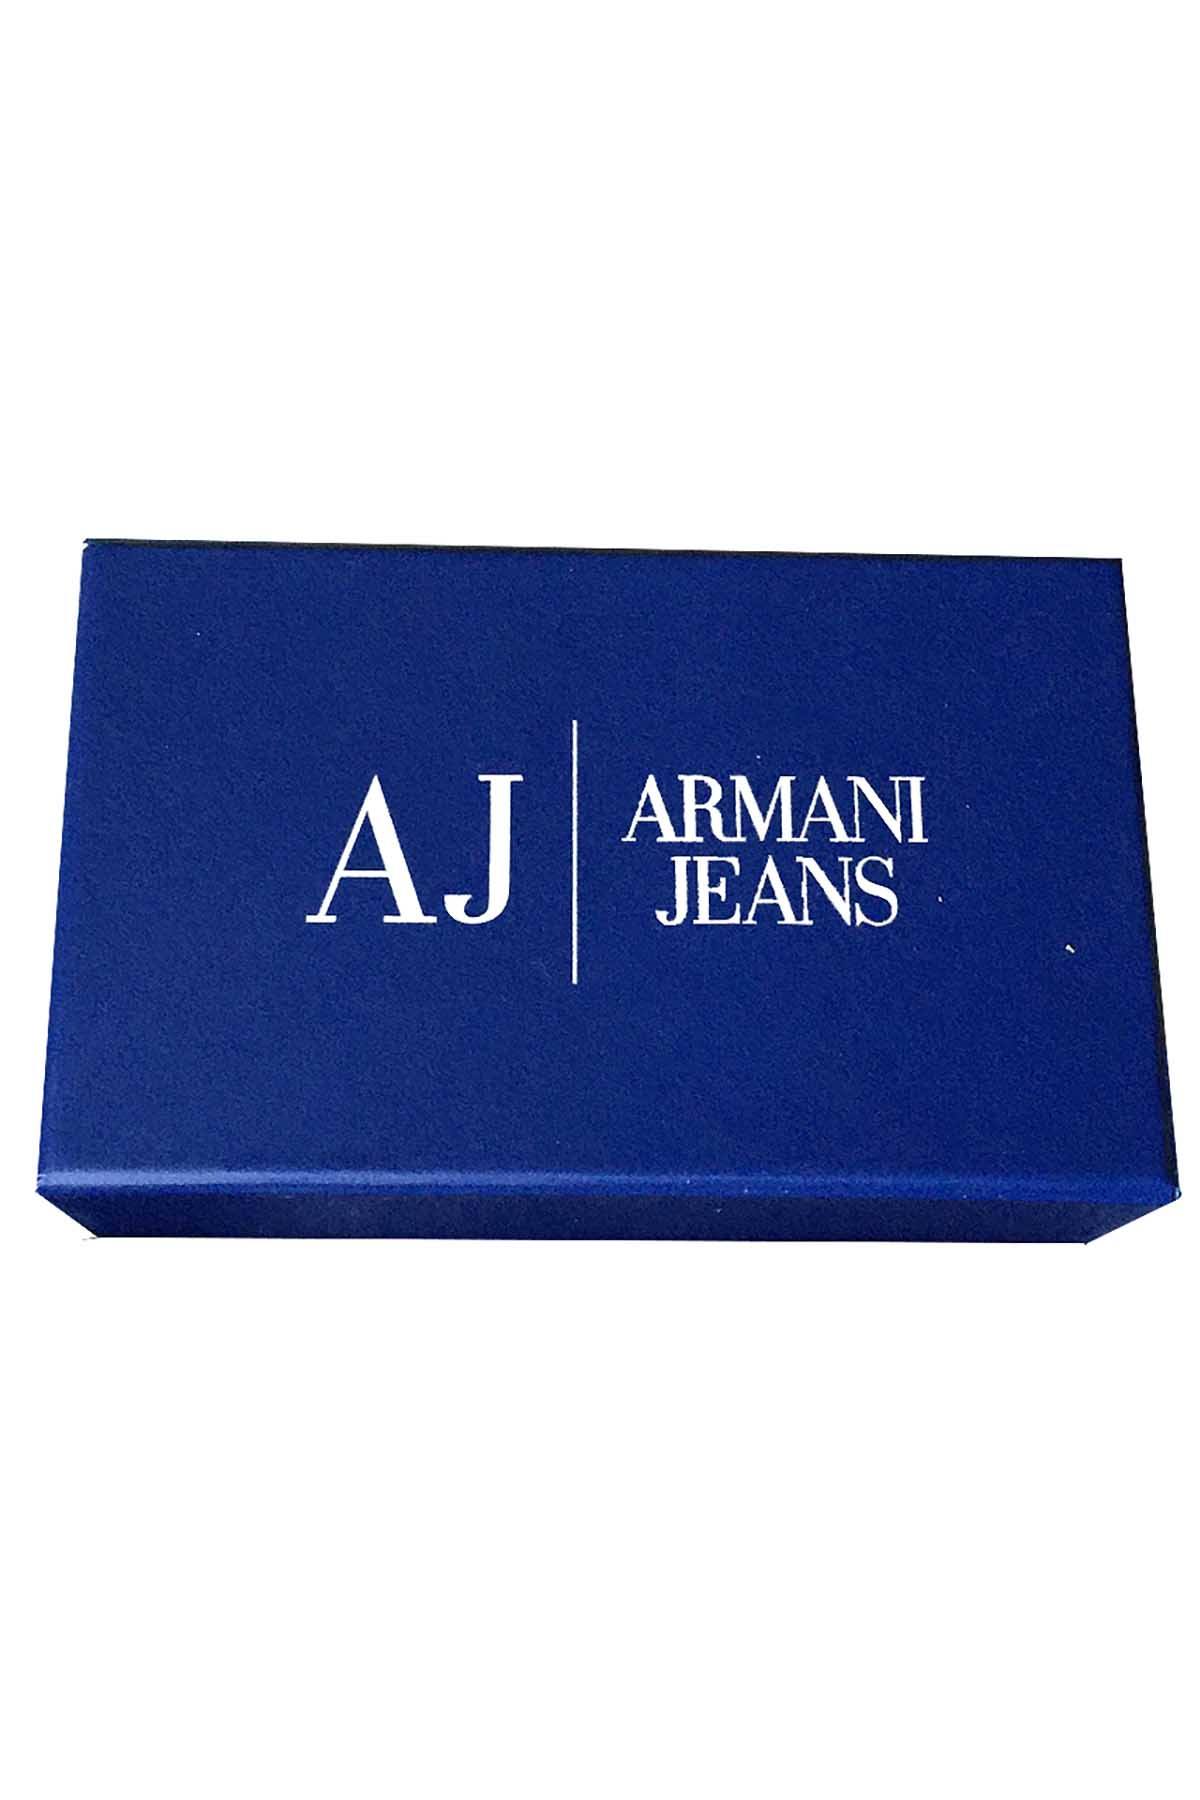 Armani Jeans Blue Induction Speaker